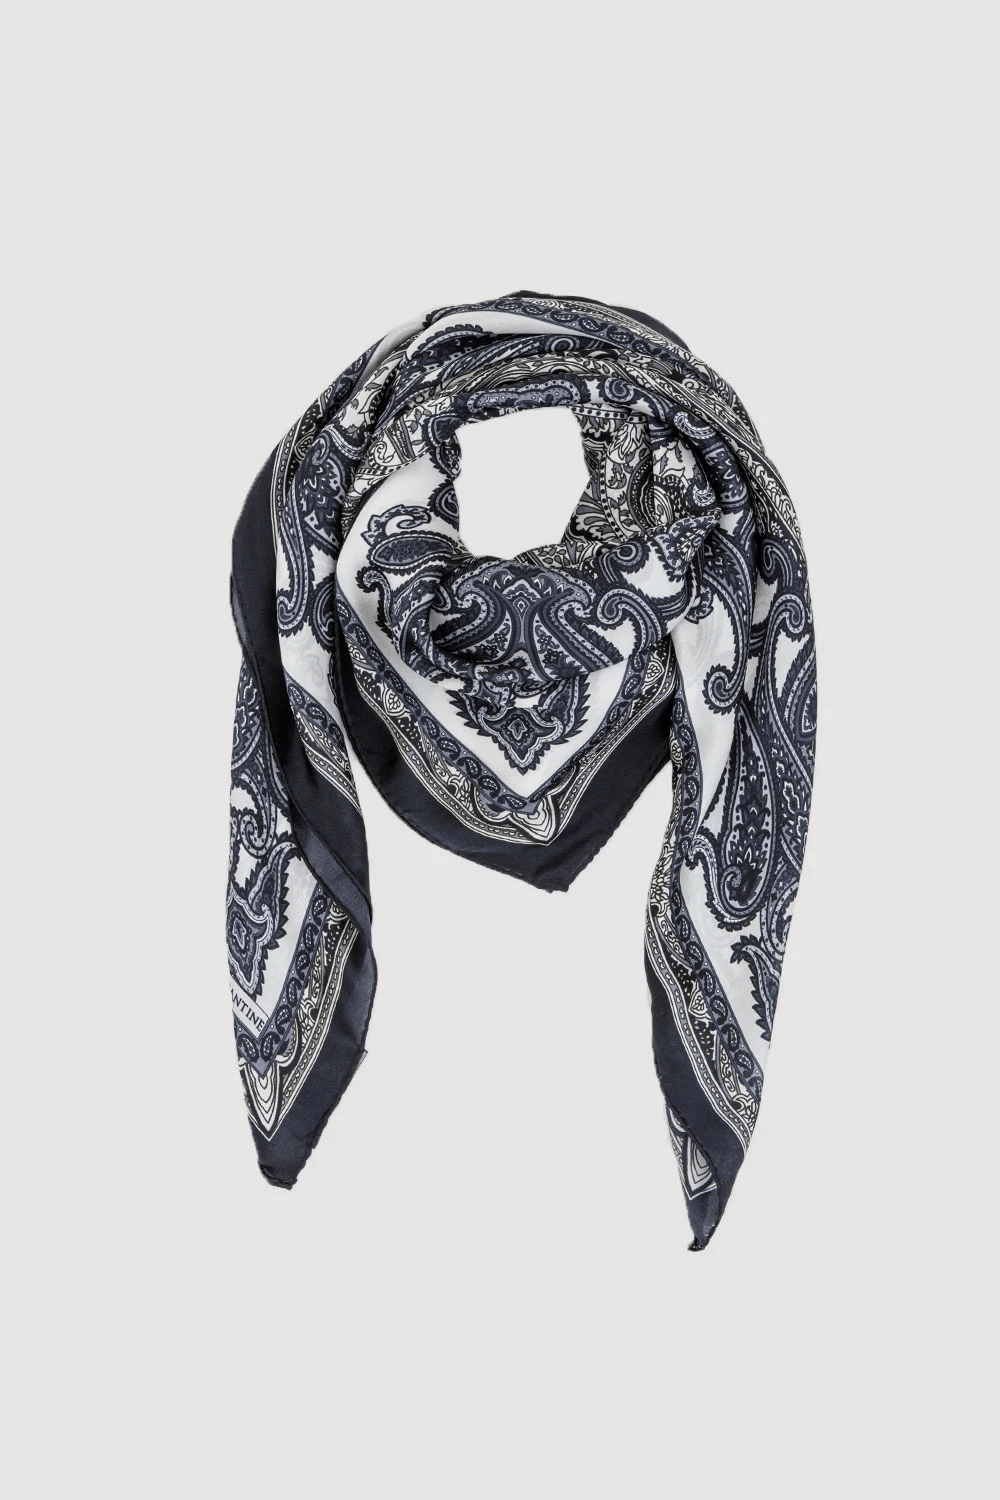 Silk Satin Scarf in Black & White Paisley Print